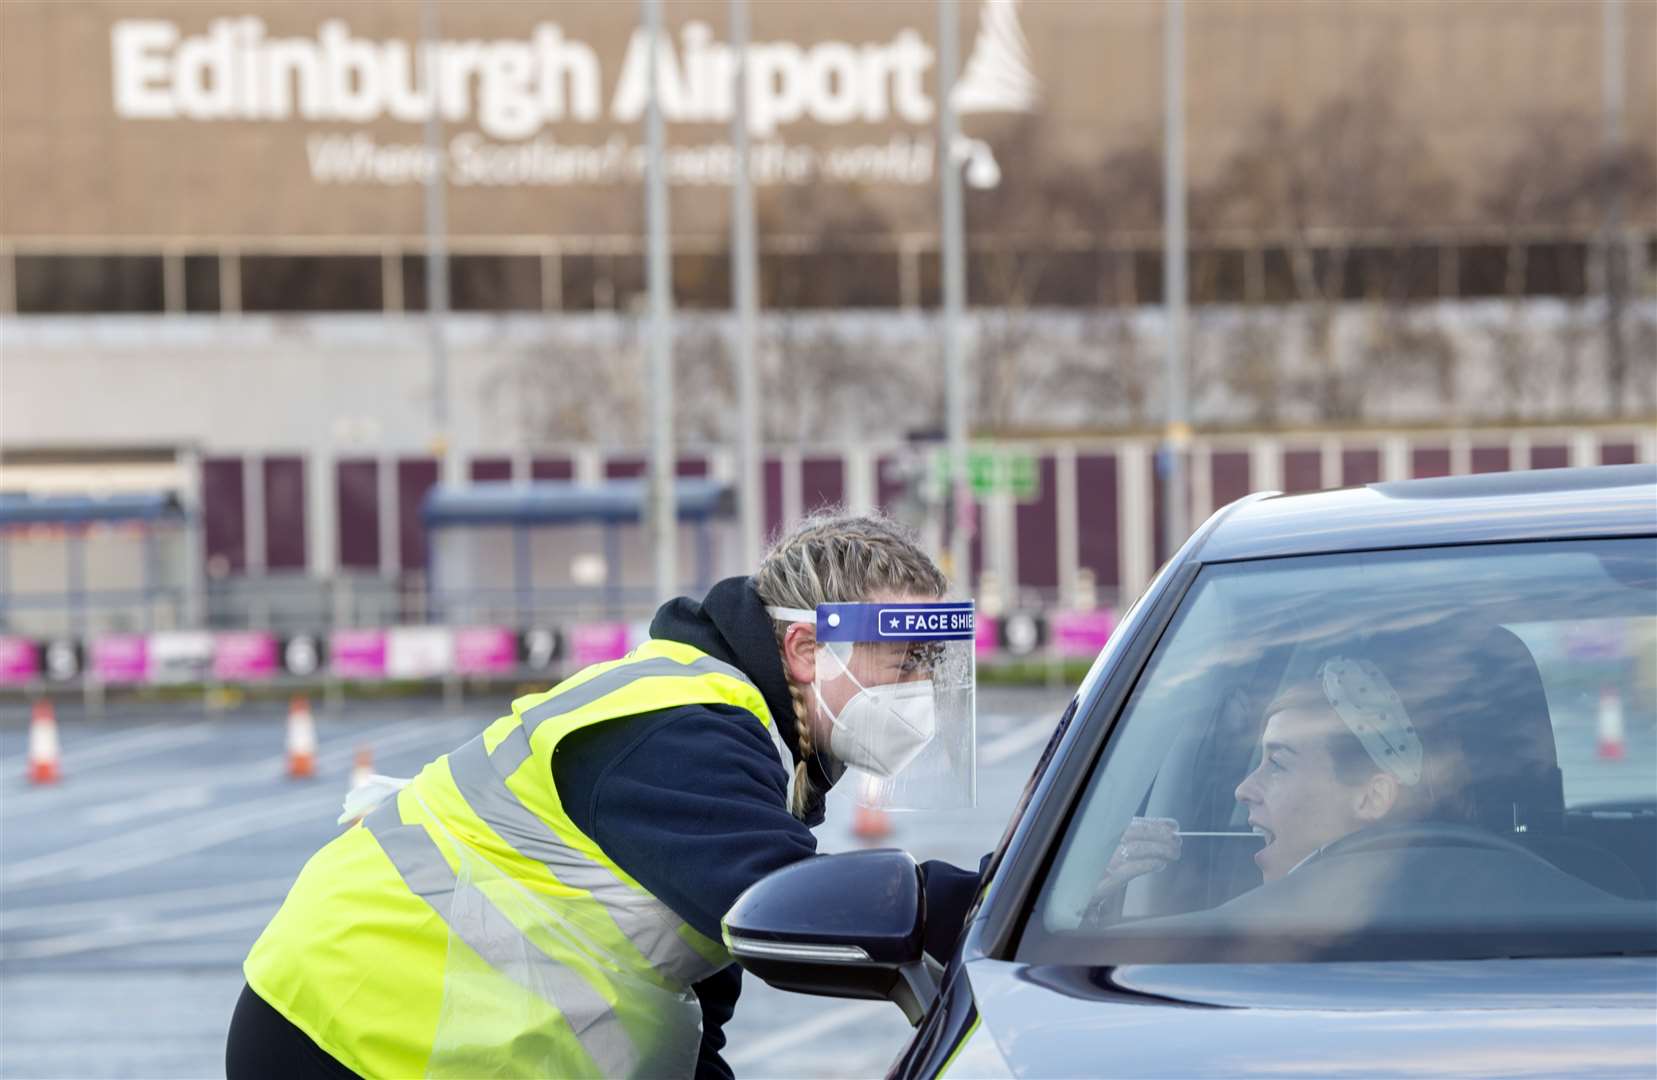 Testing is still key to international travel (Lesley Martin/Edinburgh Airport)